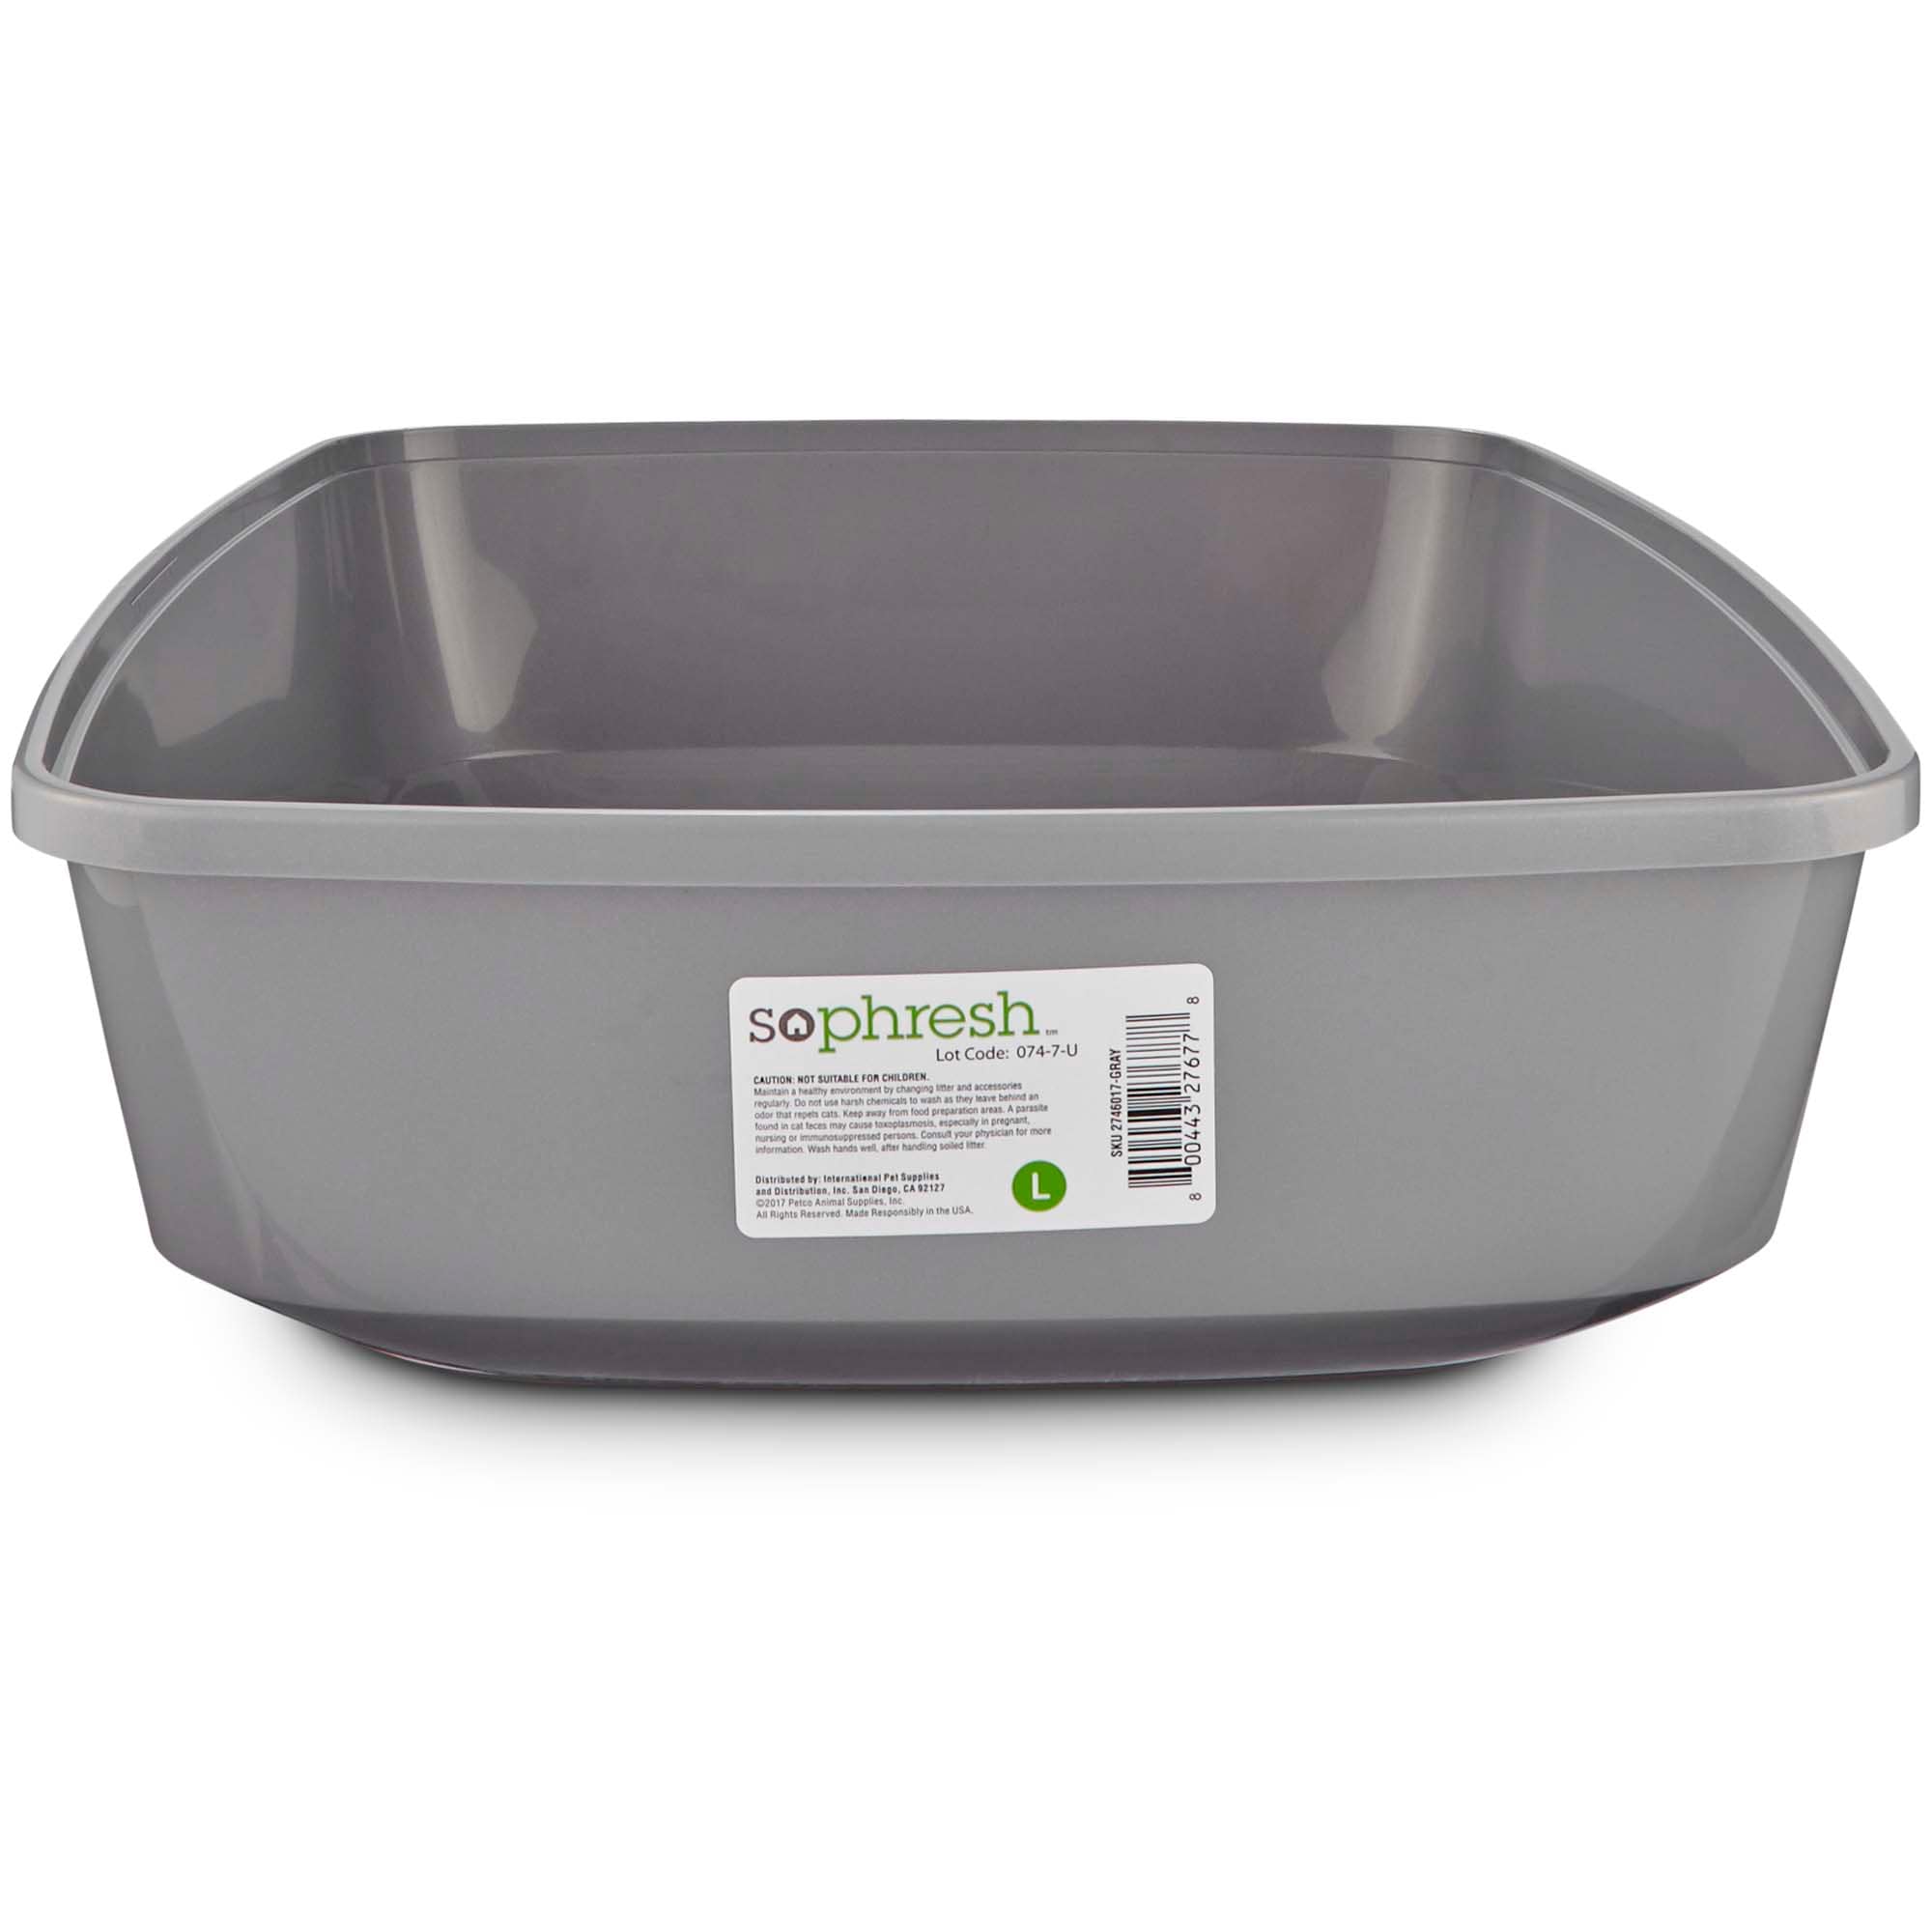 So Phresh  Gray Open Cat Litter Box, Large – Hooded Plastic Pan – Gray Litter Box with Reinforced Design